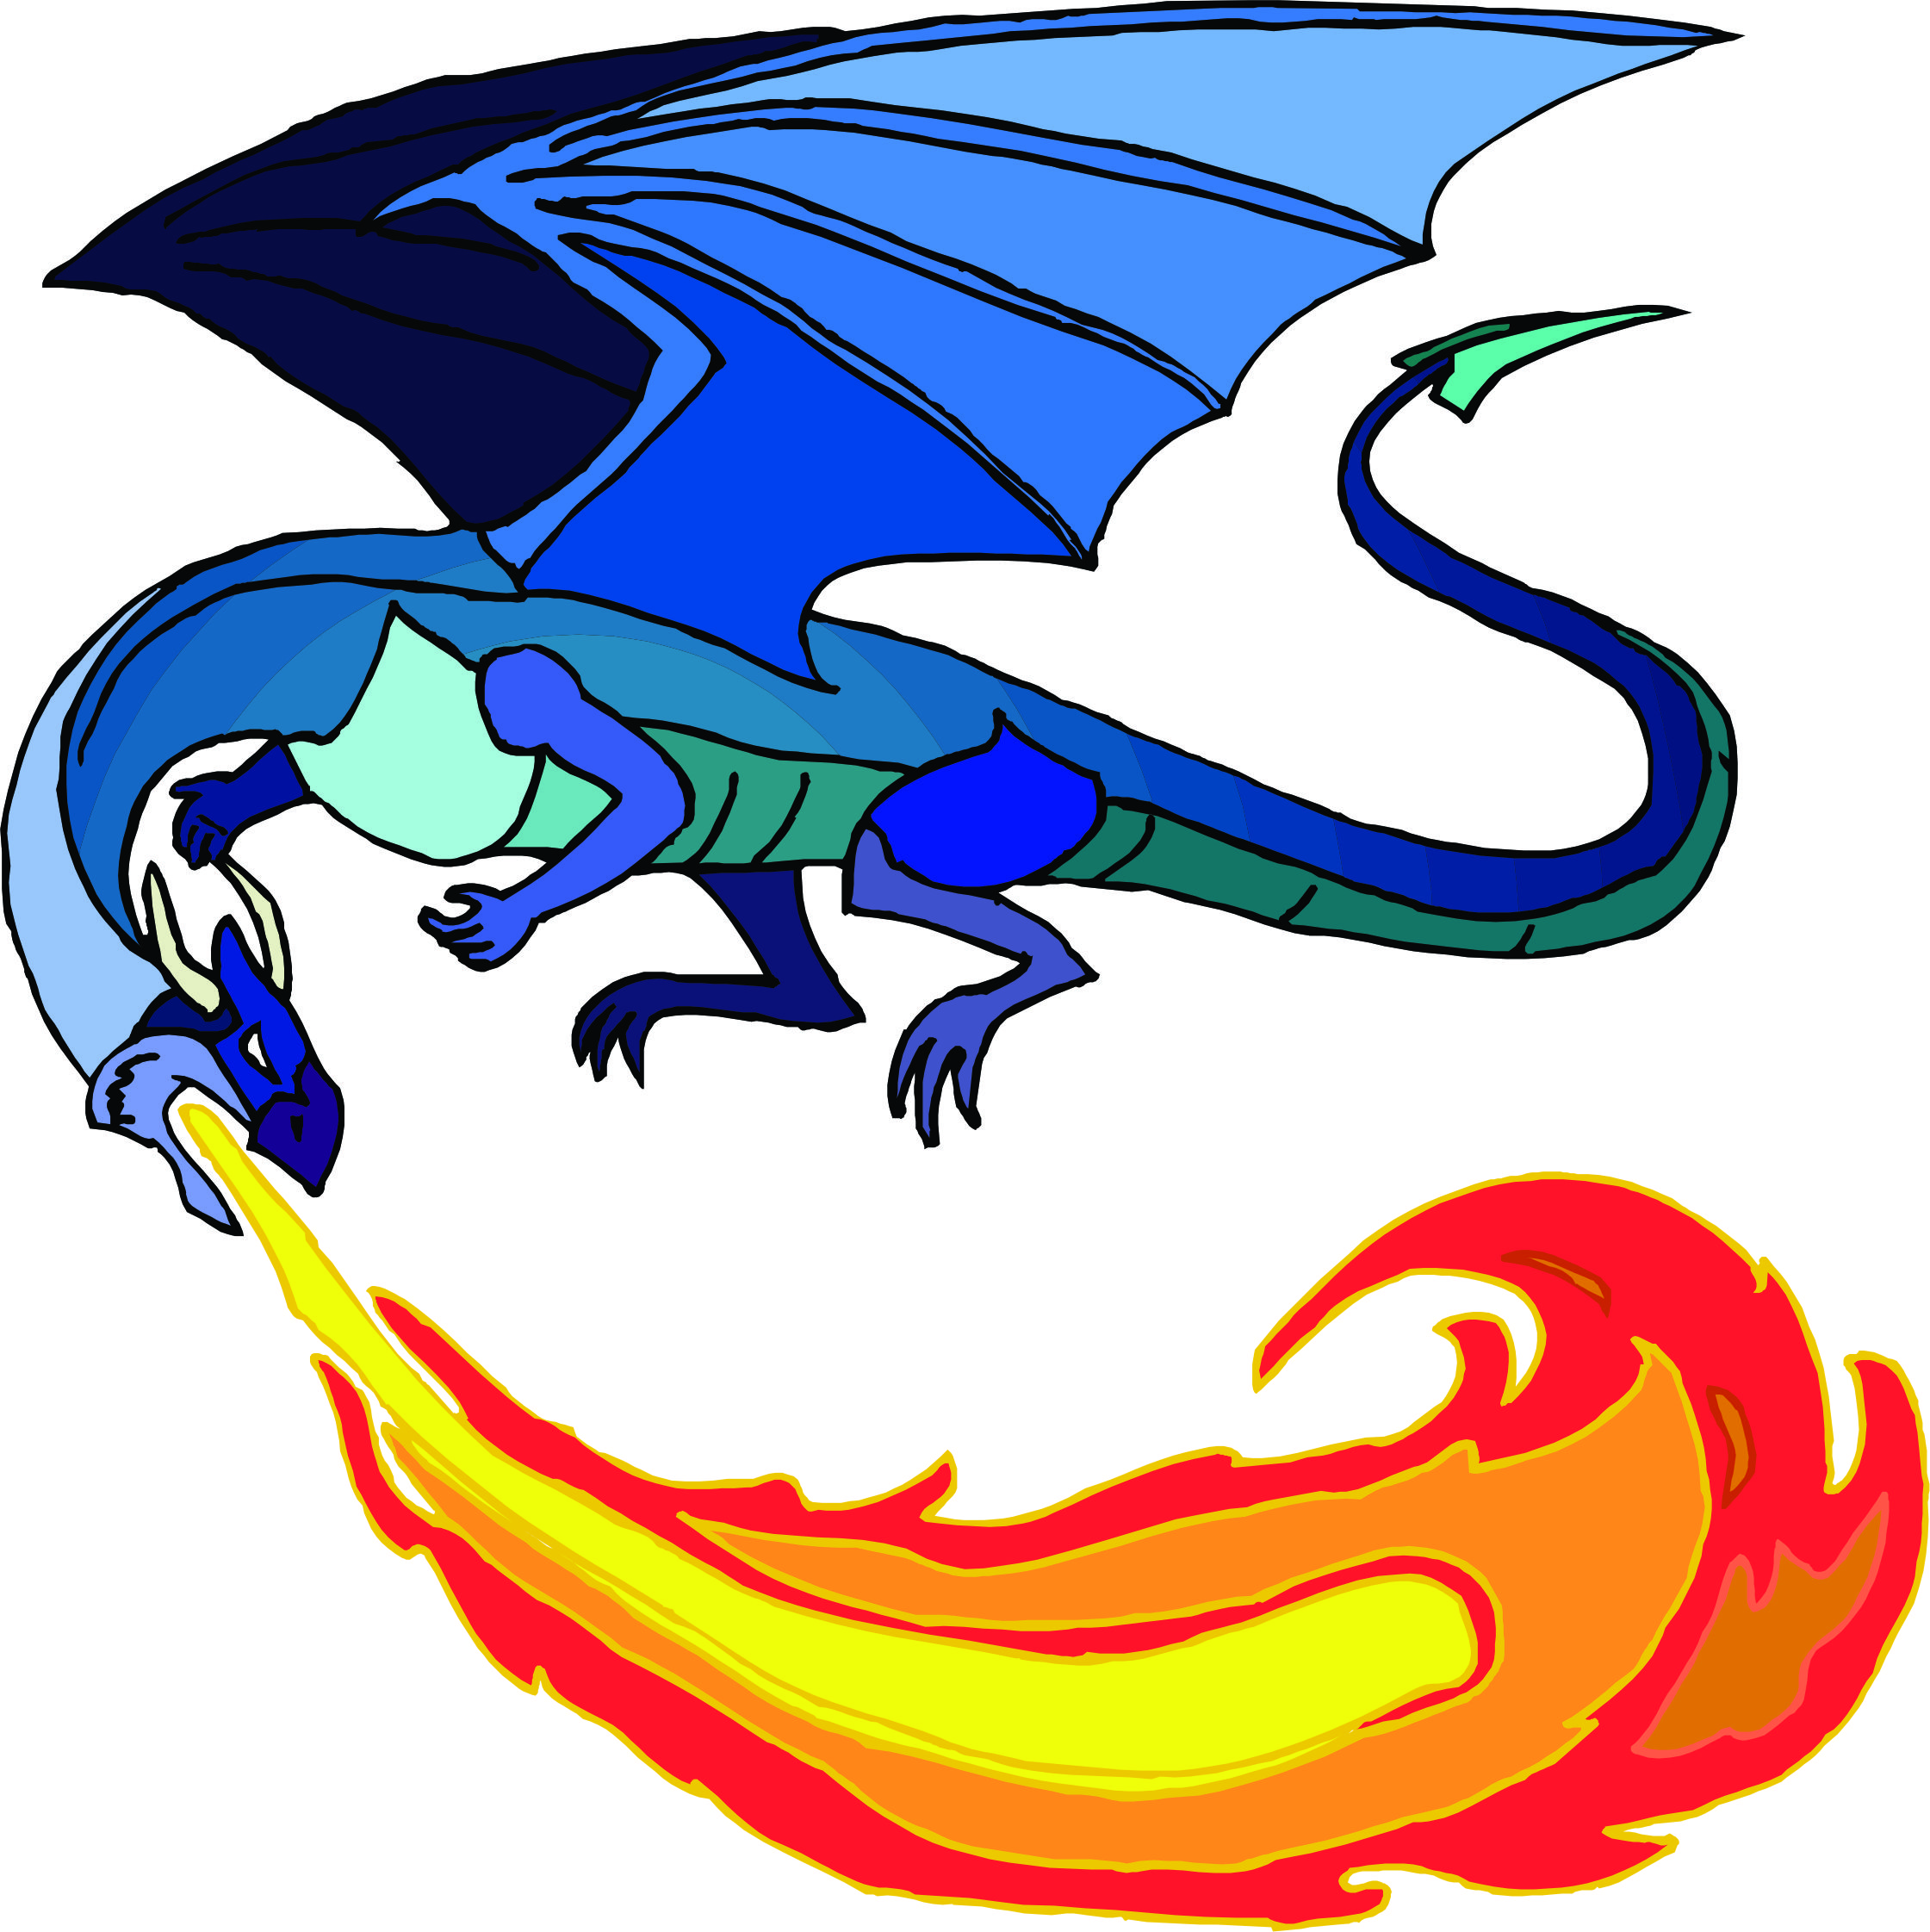 Fire dragon clipart